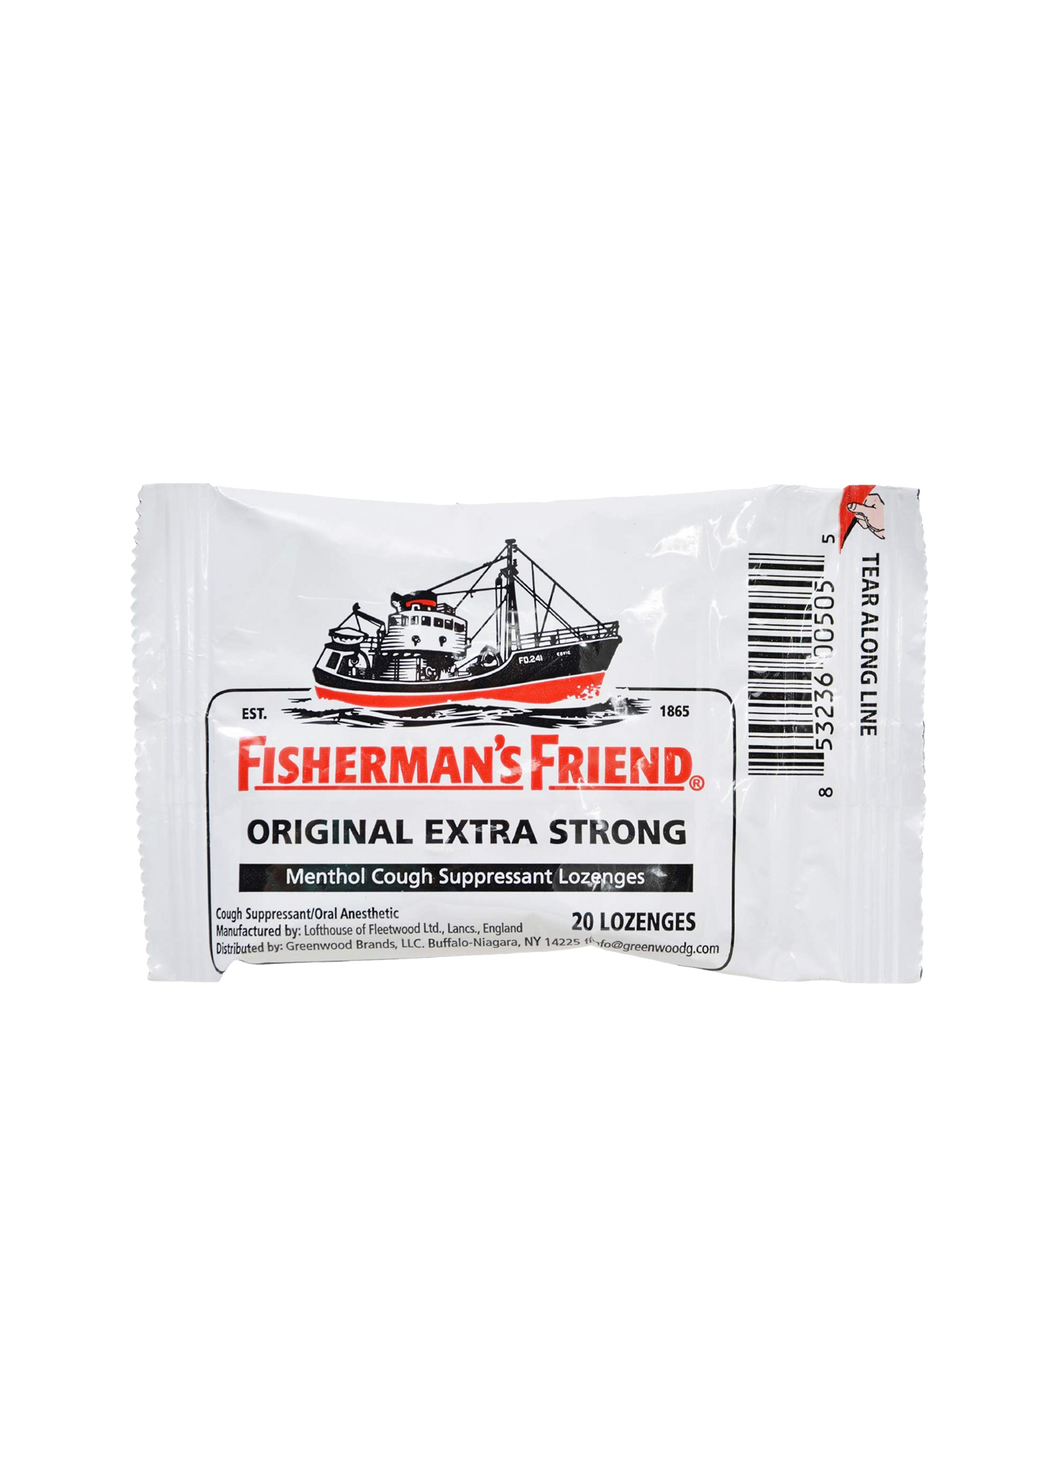 Fisherman's Friend Menthol Cough Suppressant Original Extra Strong 20 Lozenges